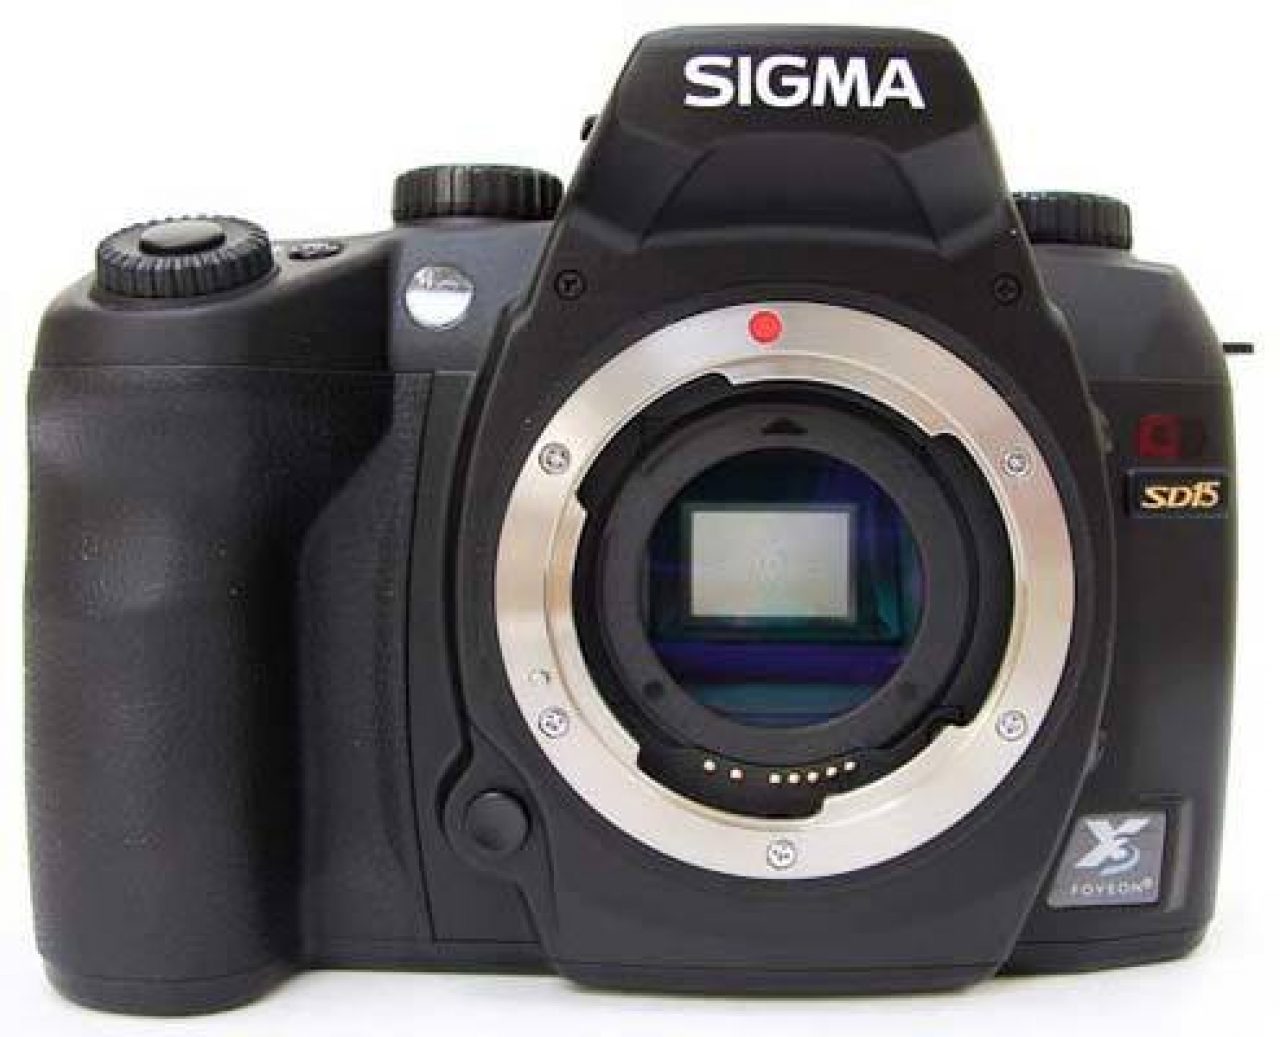 Sigma sd15. Sigma sd15 body. Сигма СД 15 фотокамера. Зеркальная камера Sigma SD 15. Камеры сигма новый